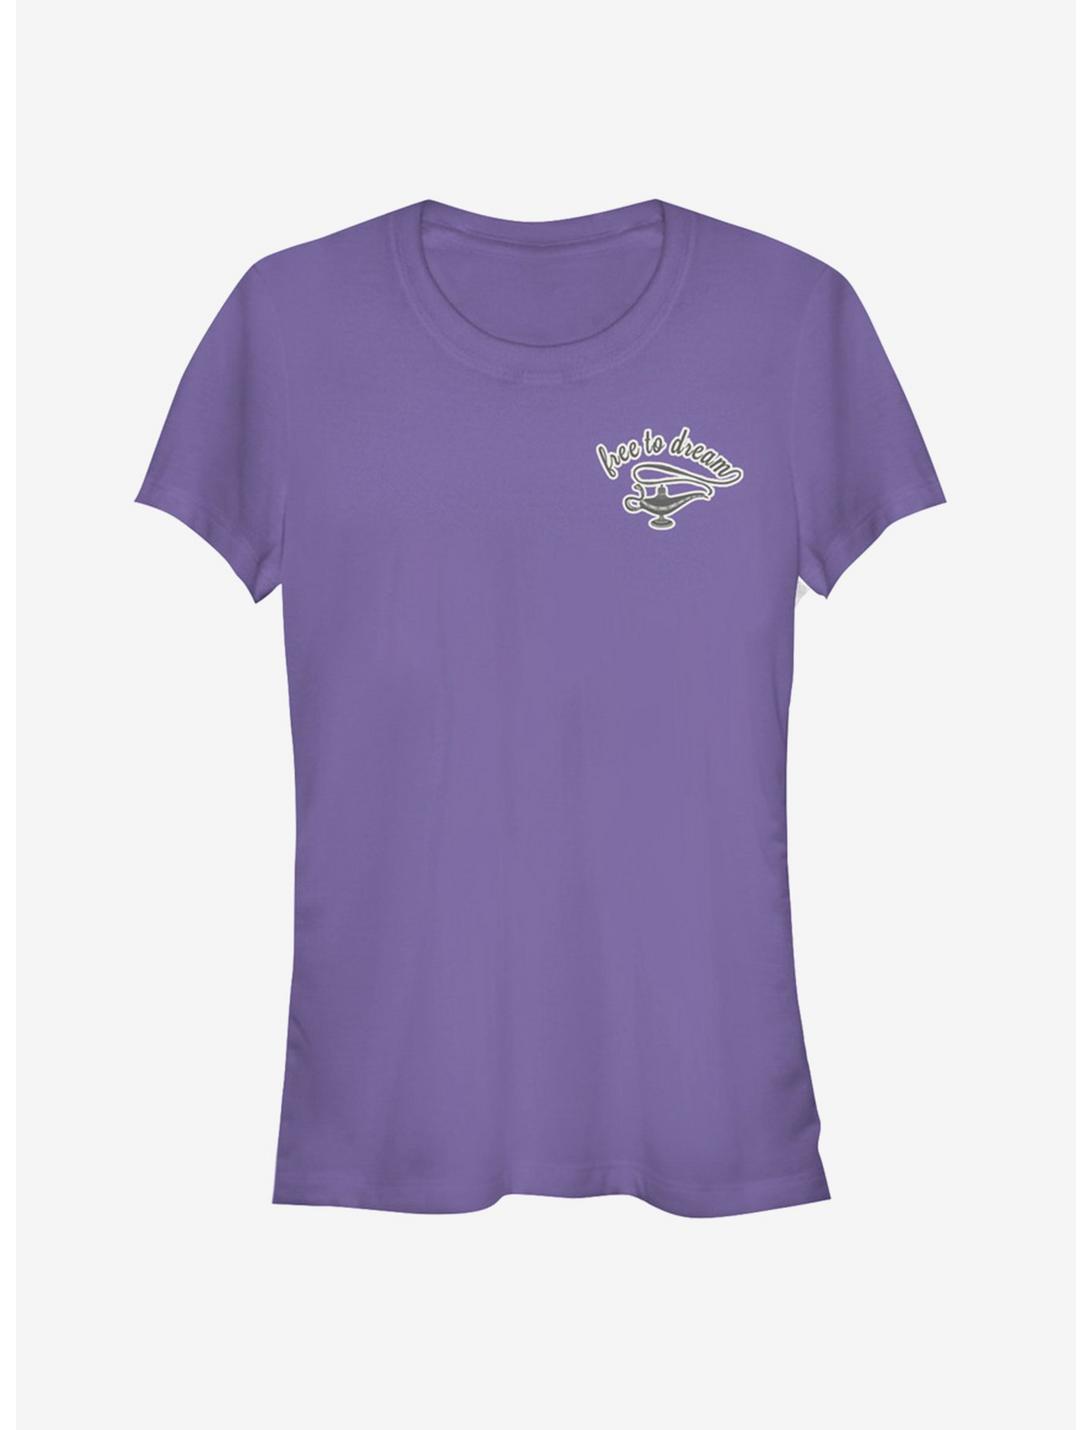 Disney Aladdin 2019 Free To Dream Girls T-Shirt, PURPLE, hi-res